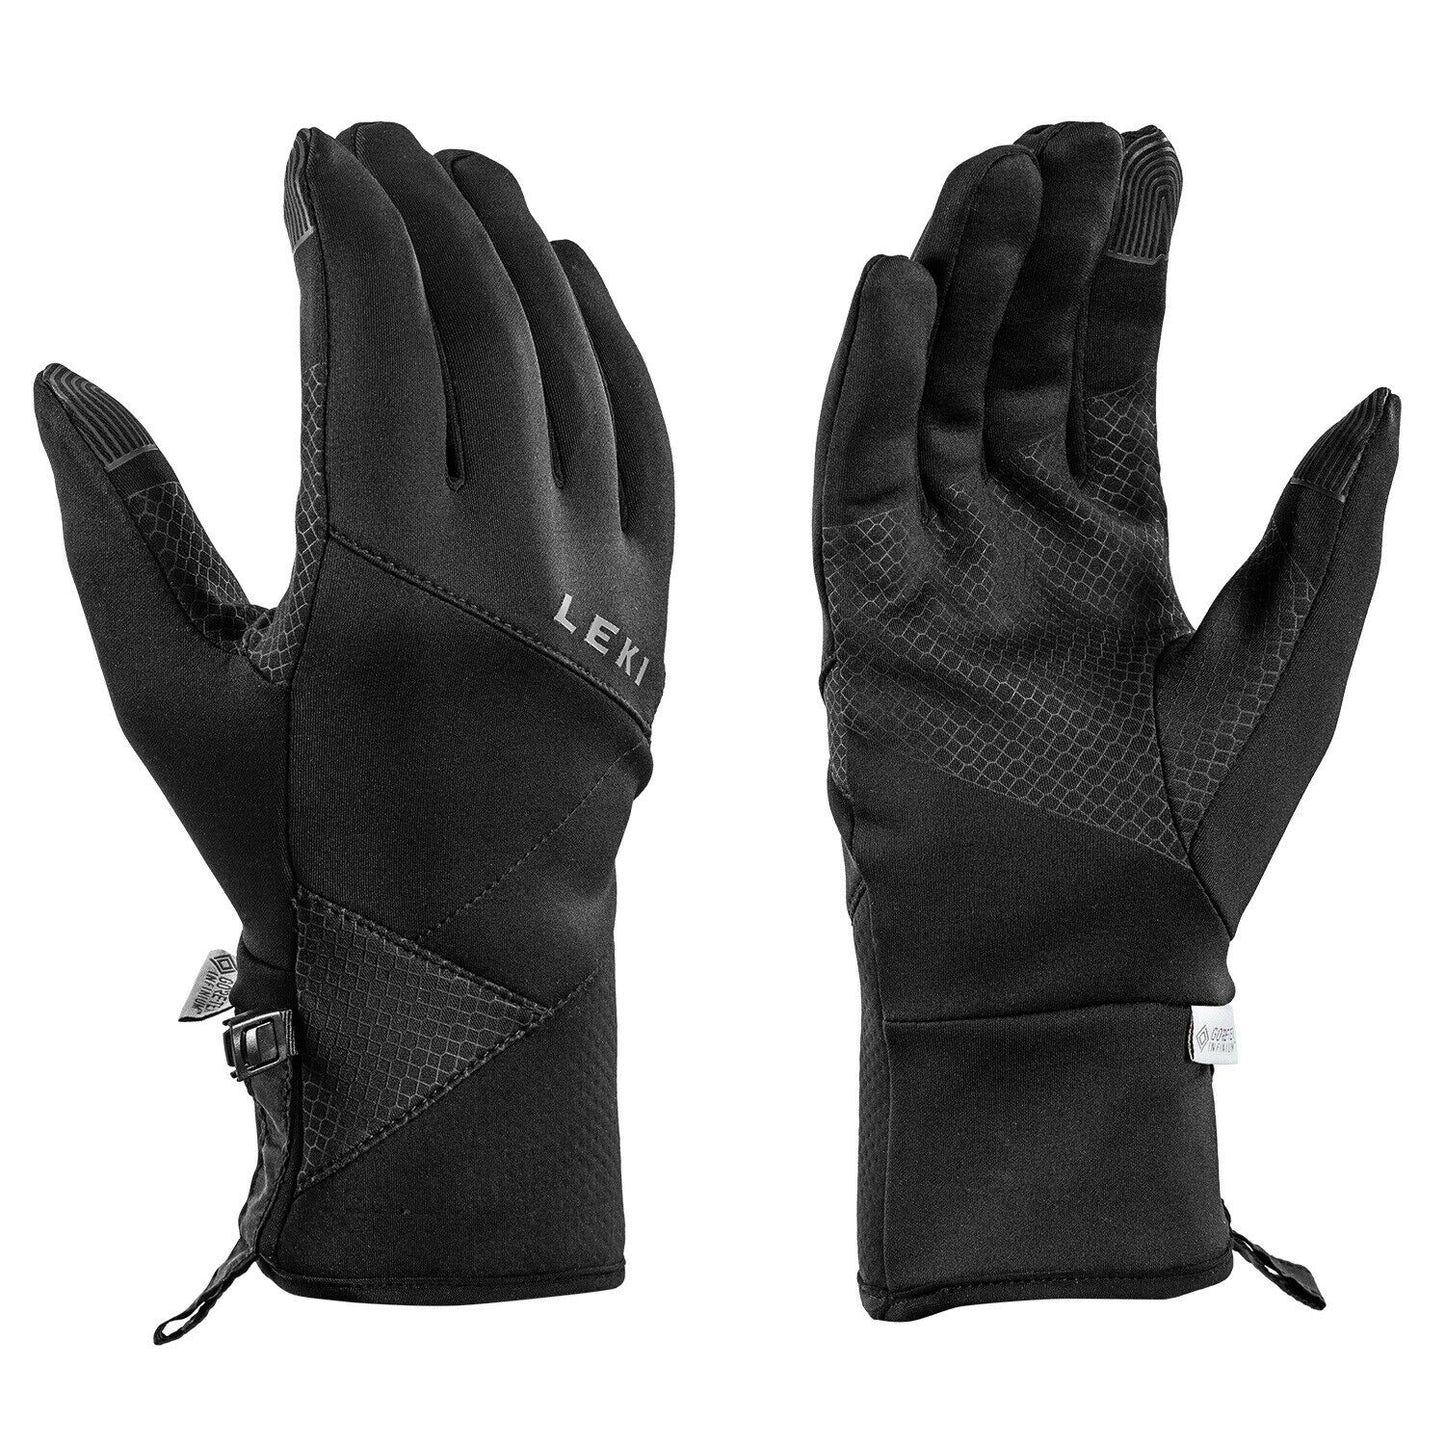 Leki Handschuhe Traverse - Komfortabel - Alltag - Waterresistant - Gr. 6 bis 11